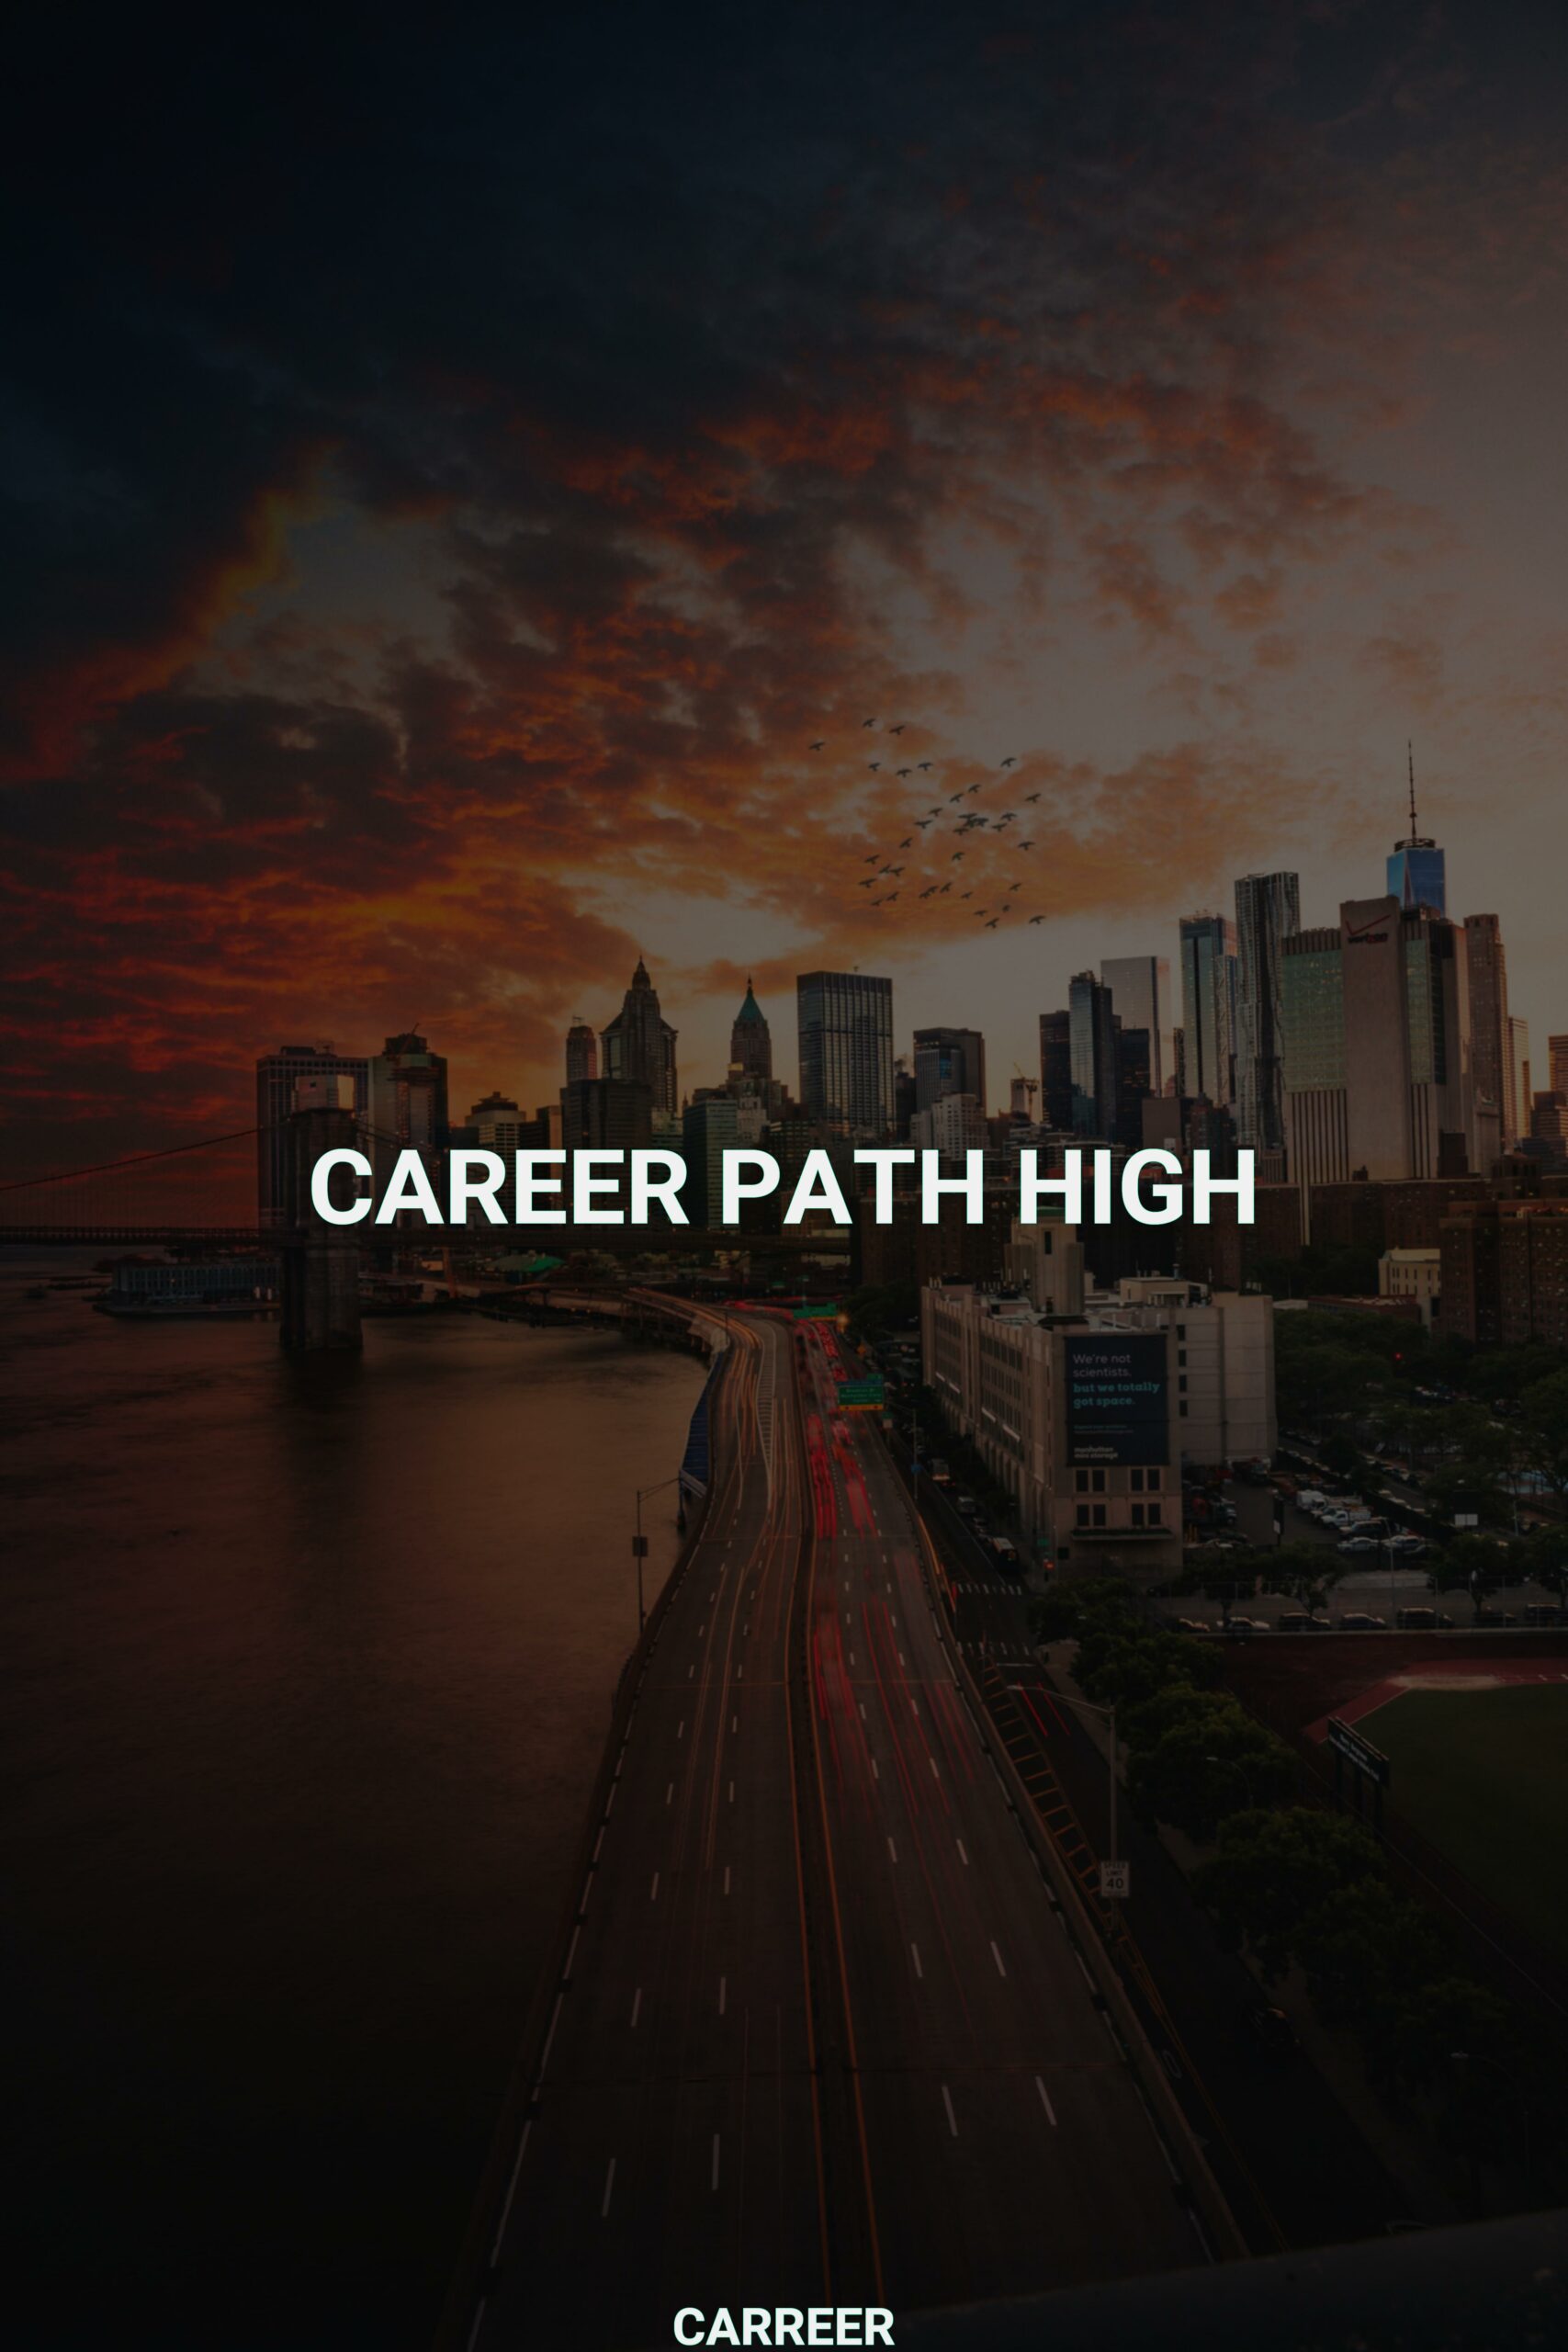 Career path high